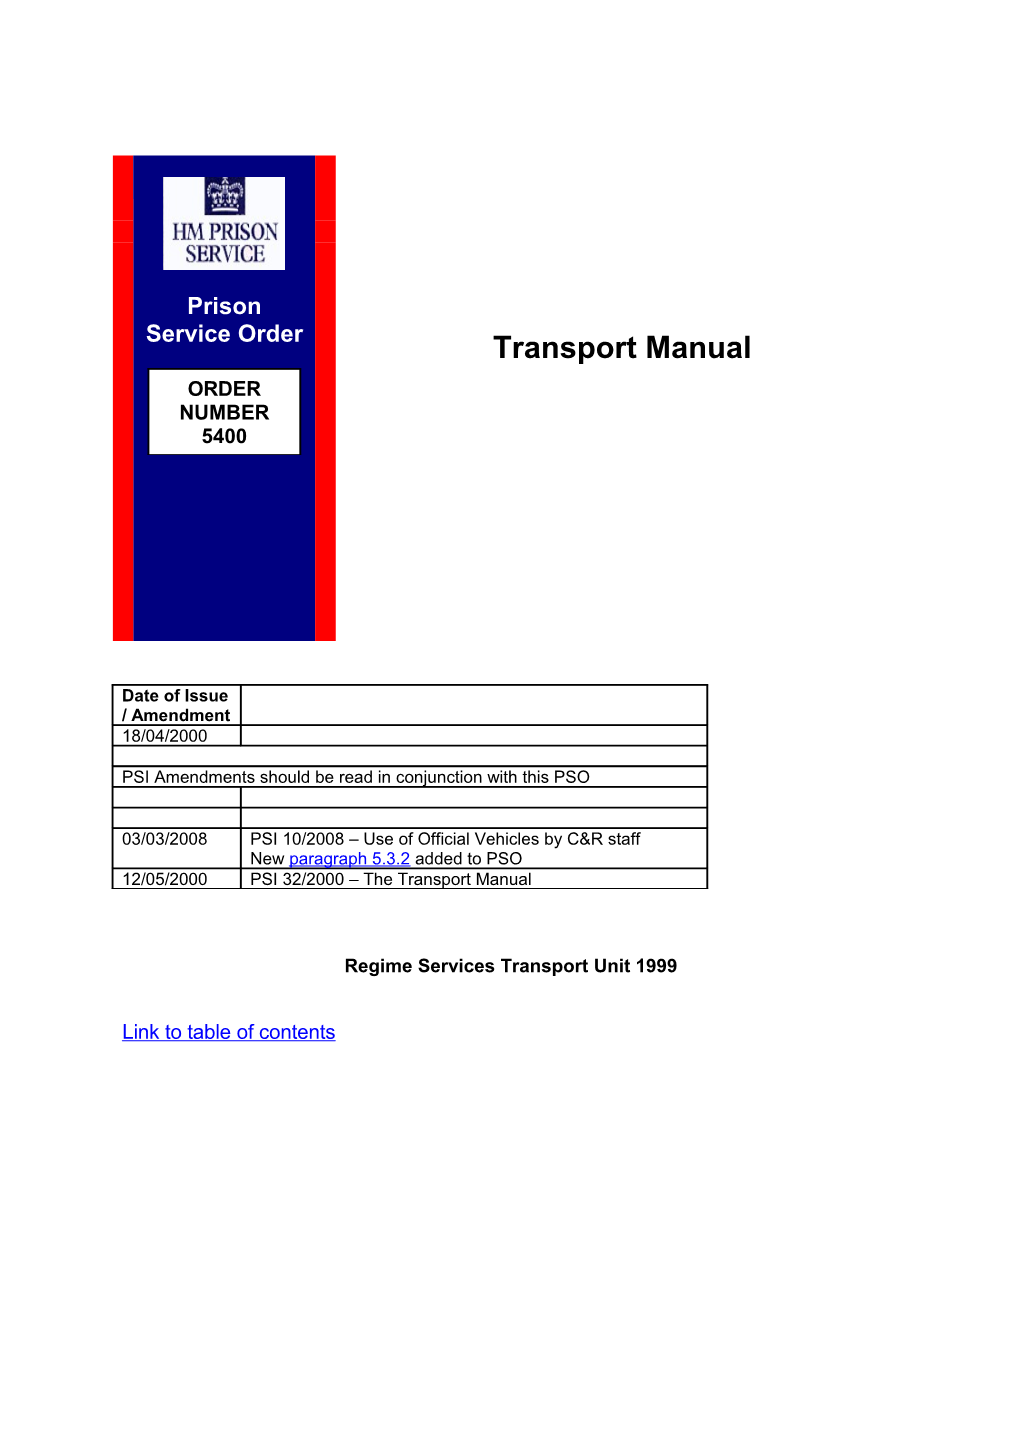 Prison Service Transport Manual